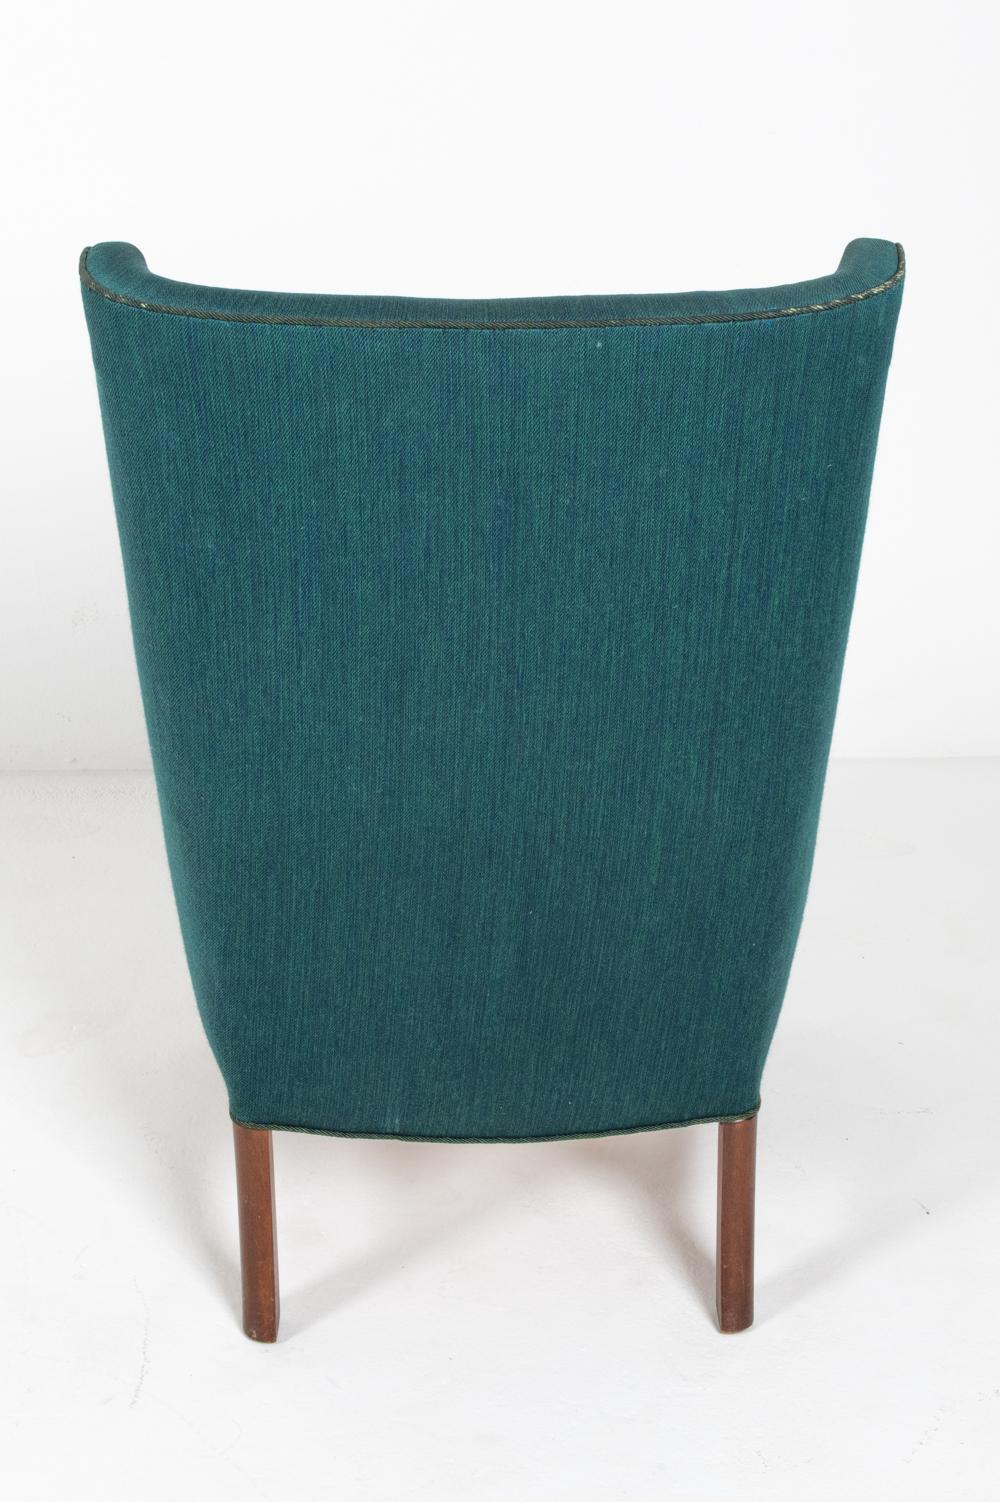 Frits Henningsen Danish Highback Lounge Chair, c. 1940's For Sale 7